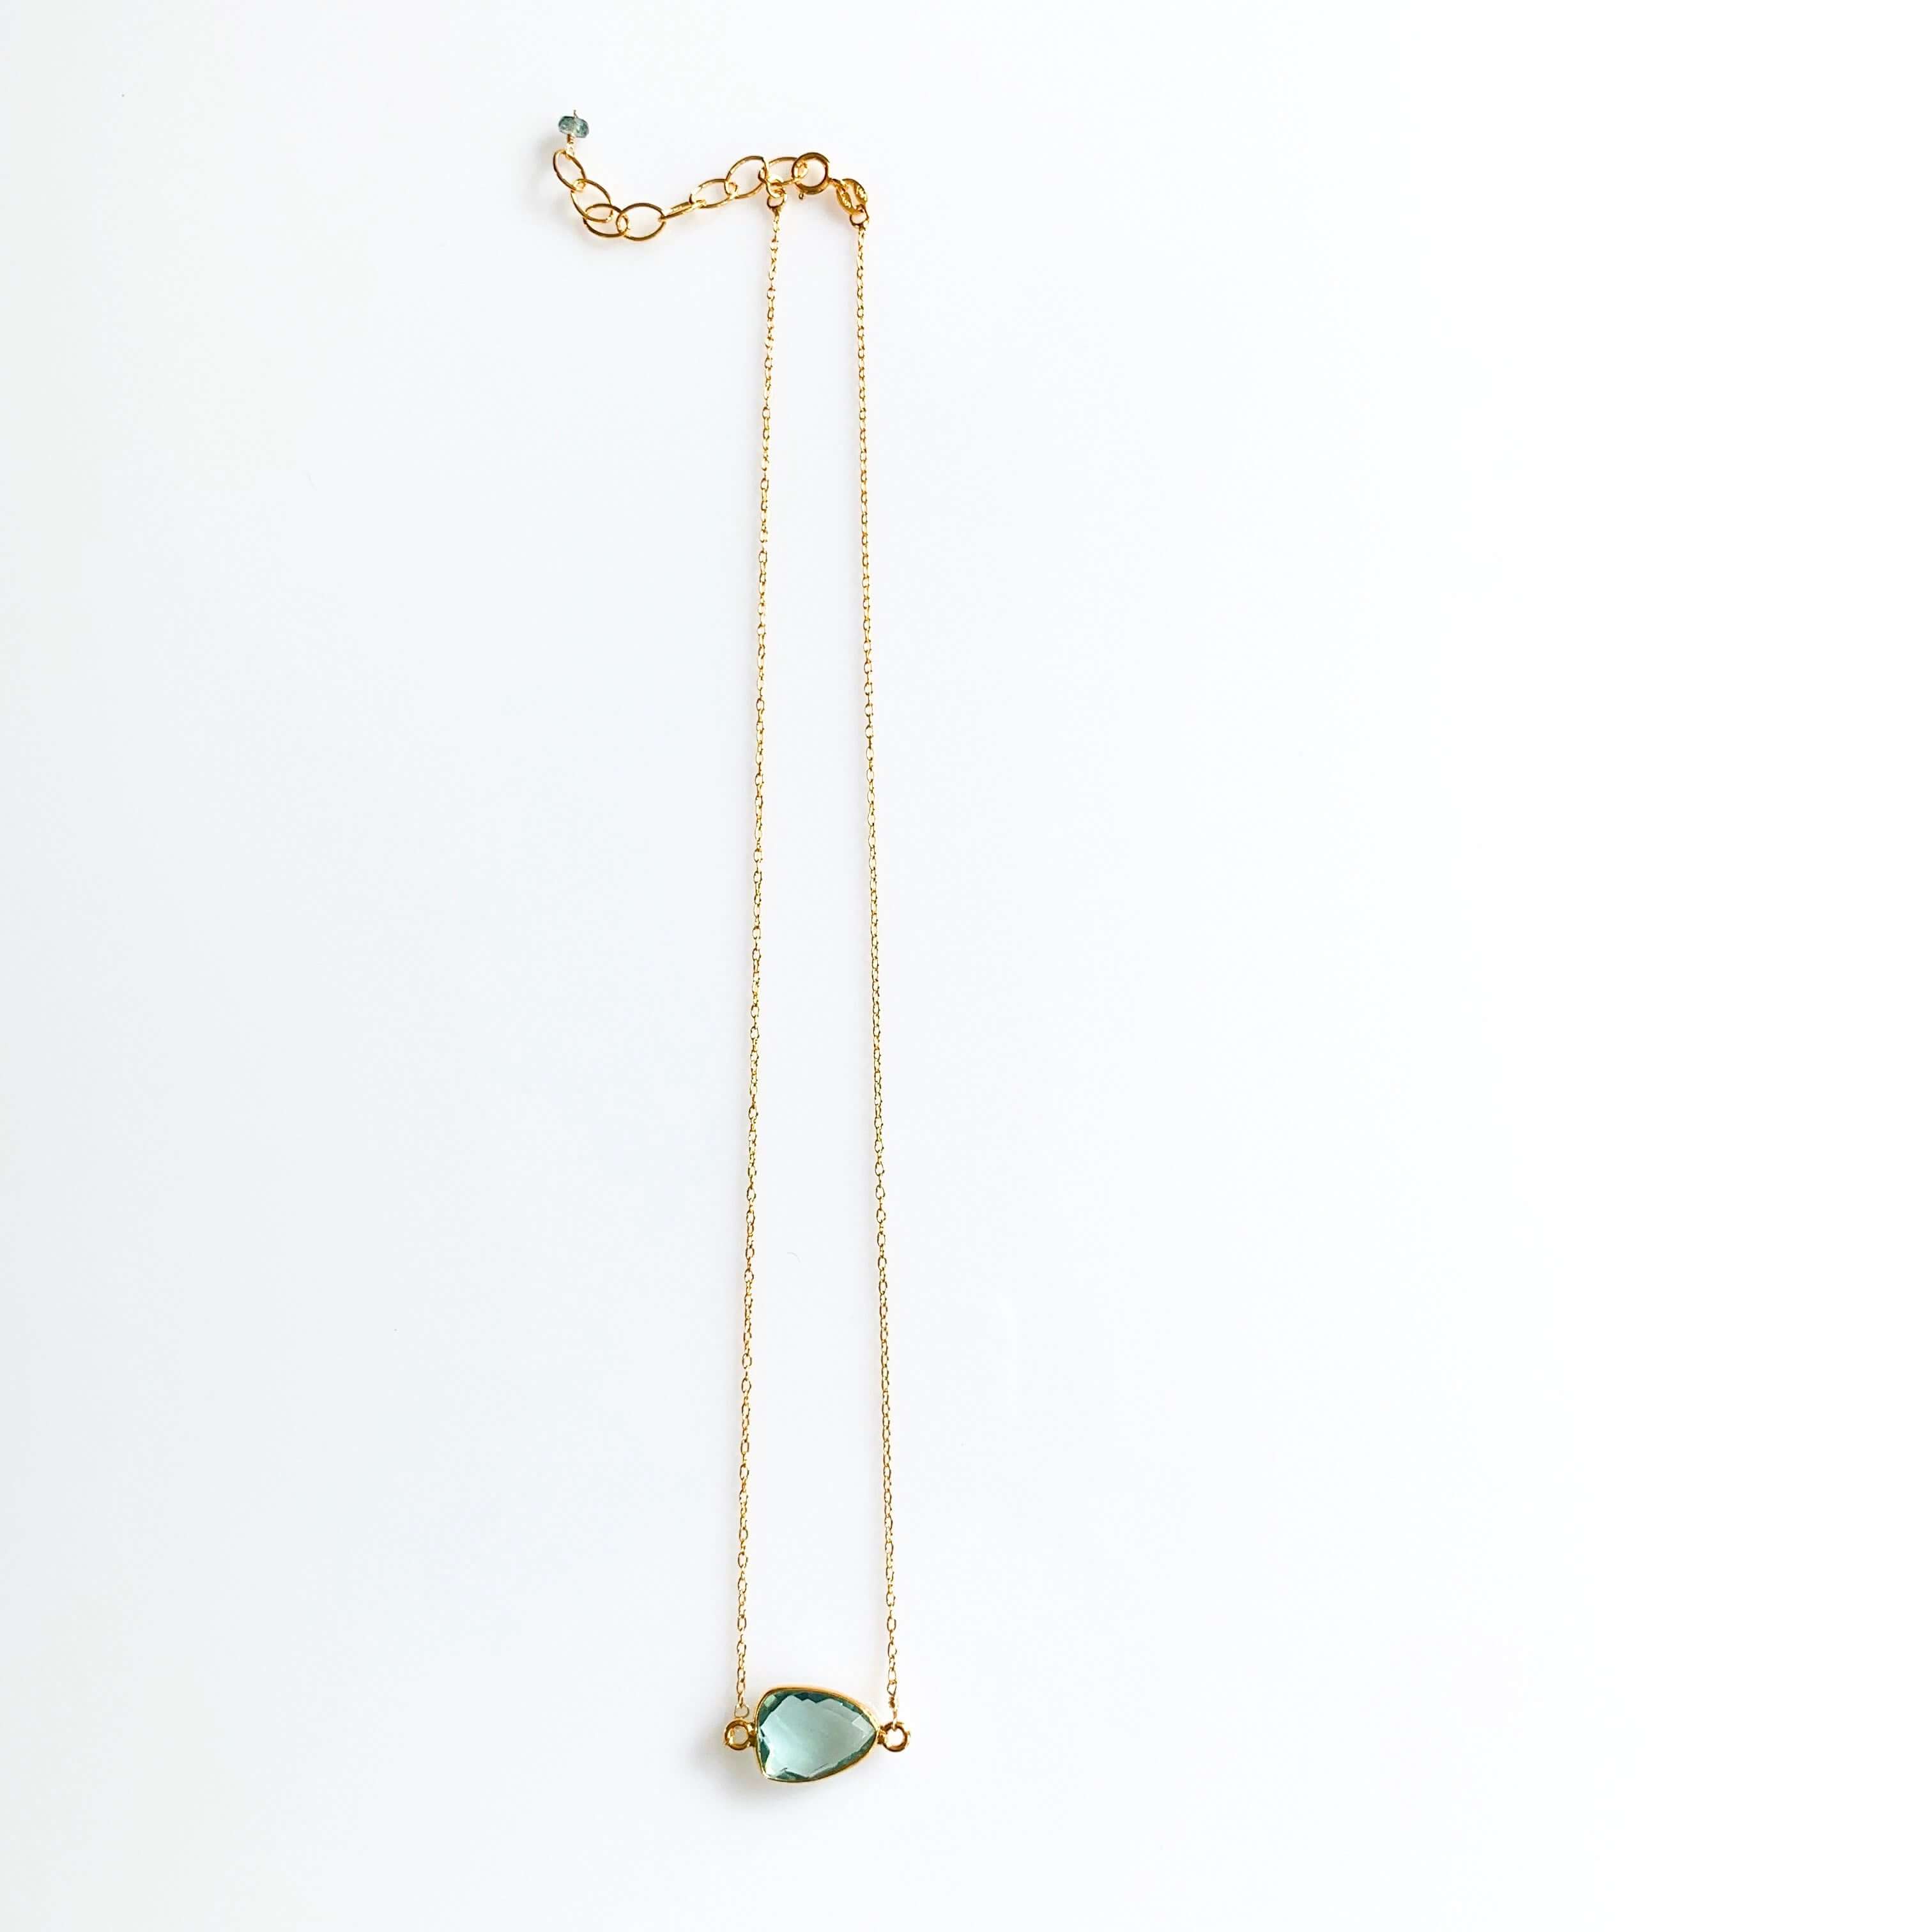 Minimalist Gold Necklaces with Bezel-Set Green Amethyst Stone